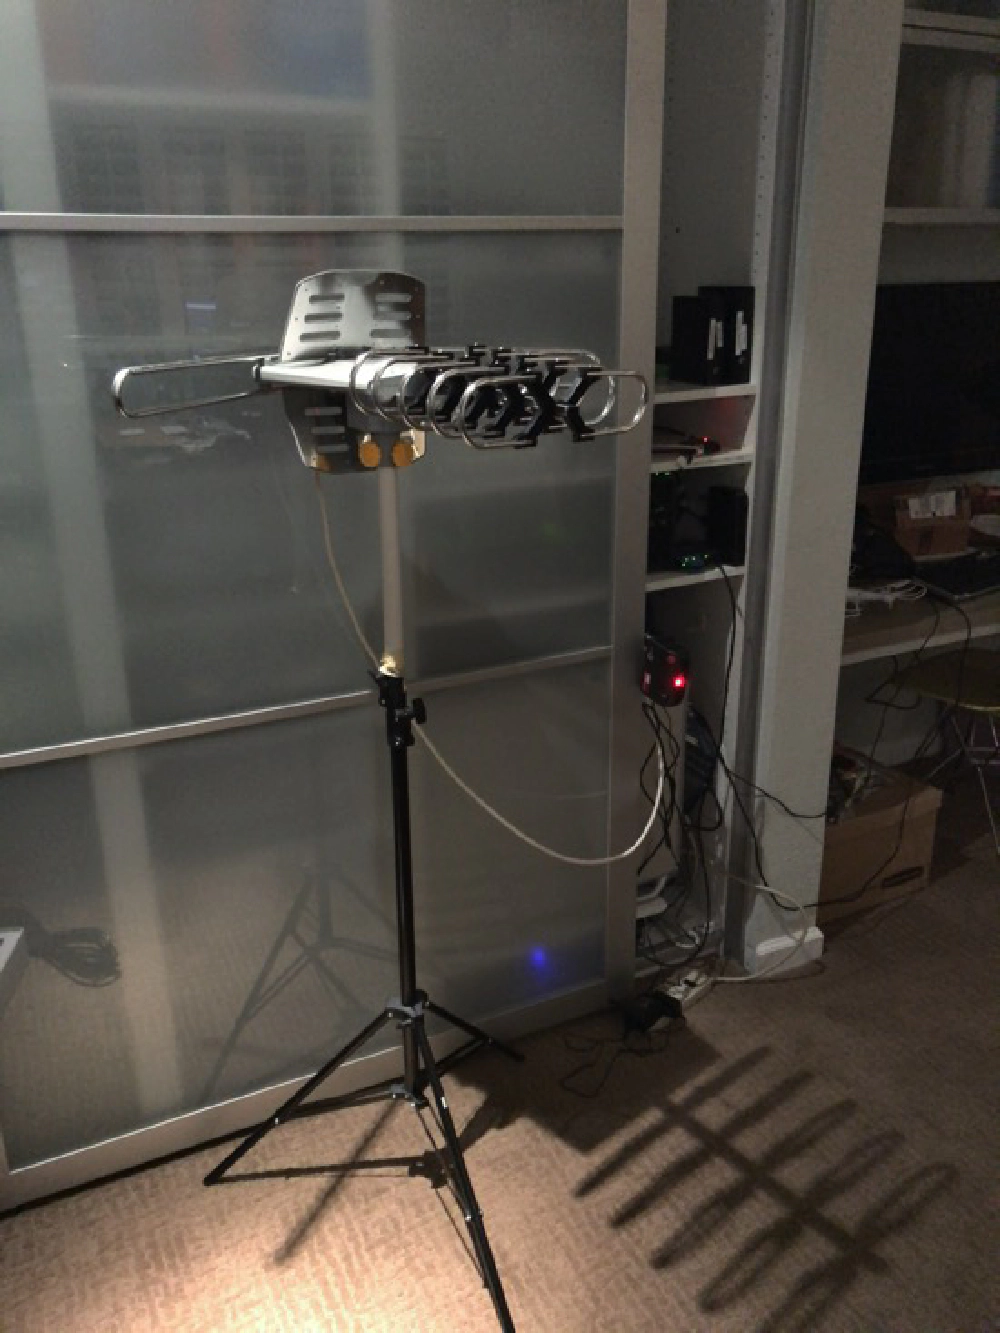 antenna set up next to my office server closet